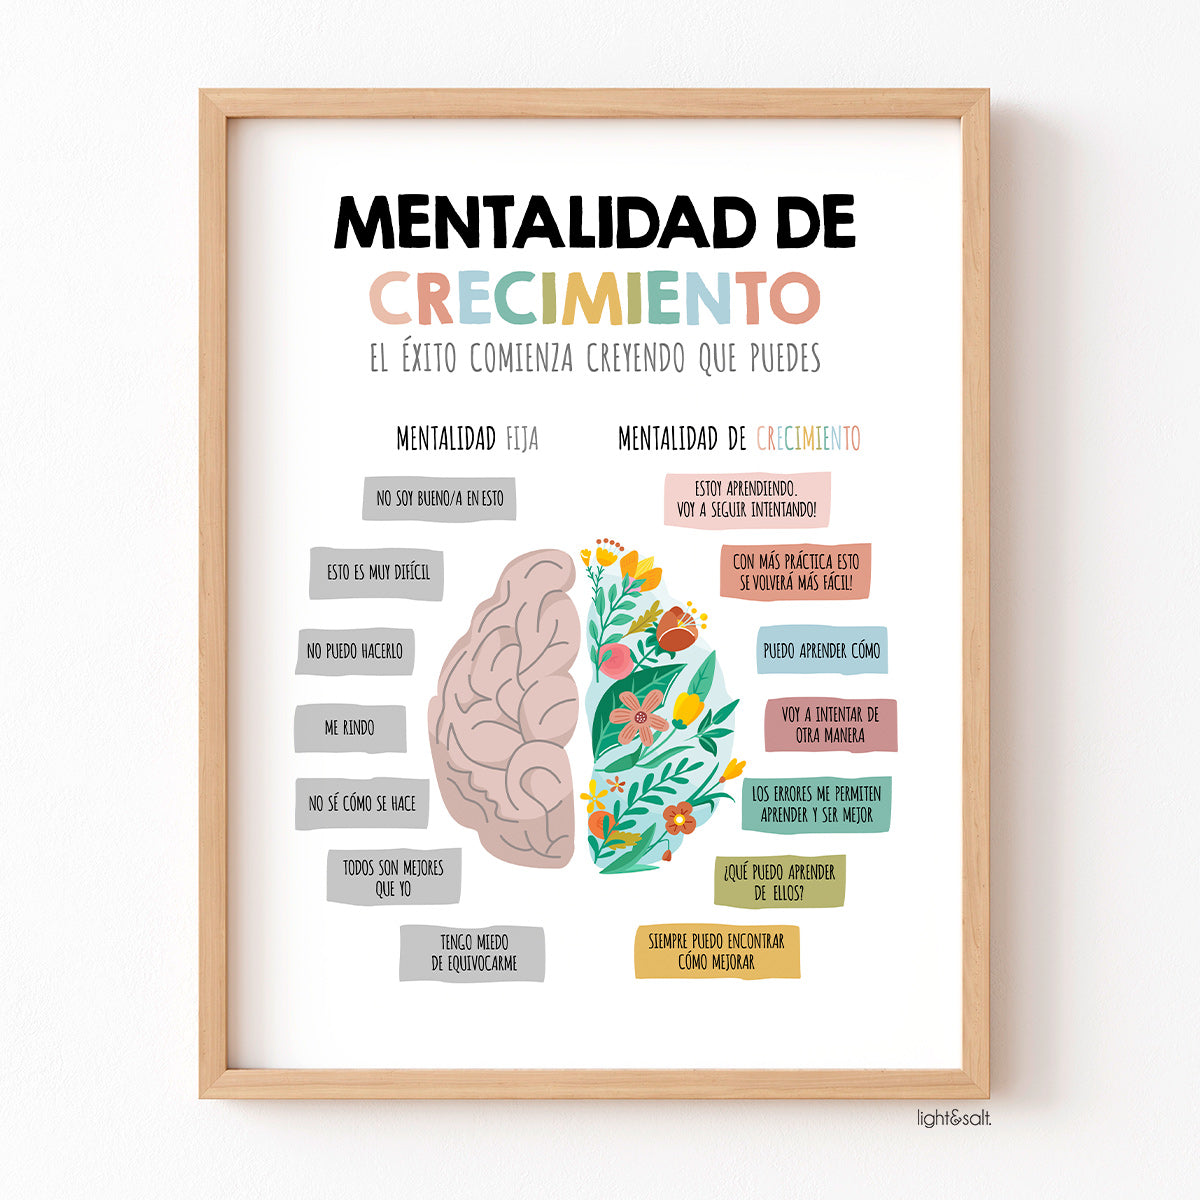 Mentalidad de crecimiento, Spanish Growth mindset vs fixed mindset poster